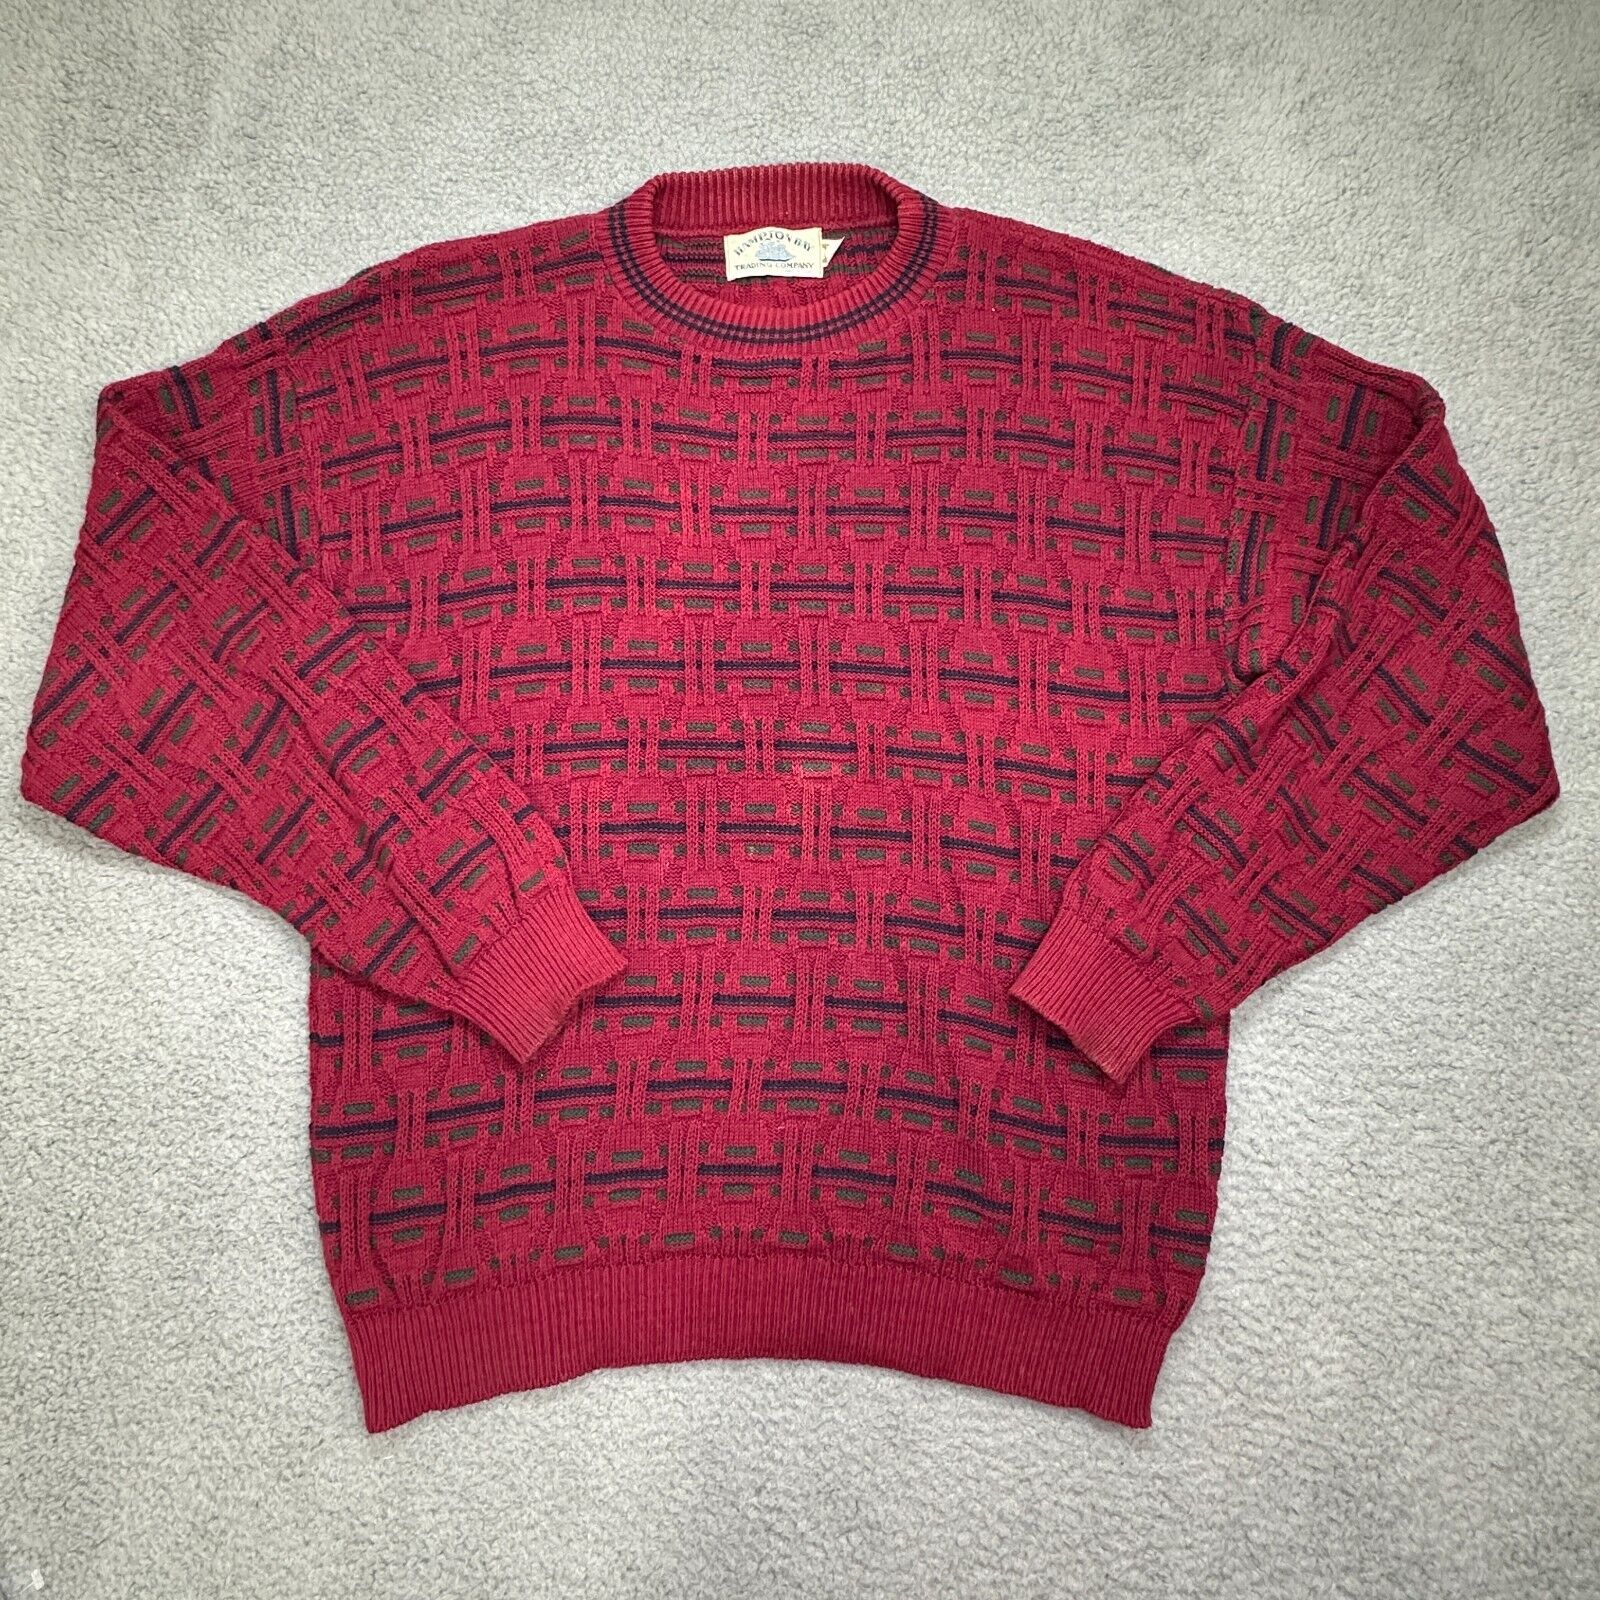 Vintage Hampton Bay Sweater Mens Large Red Textile Knit Pullover Crewneck Preppy